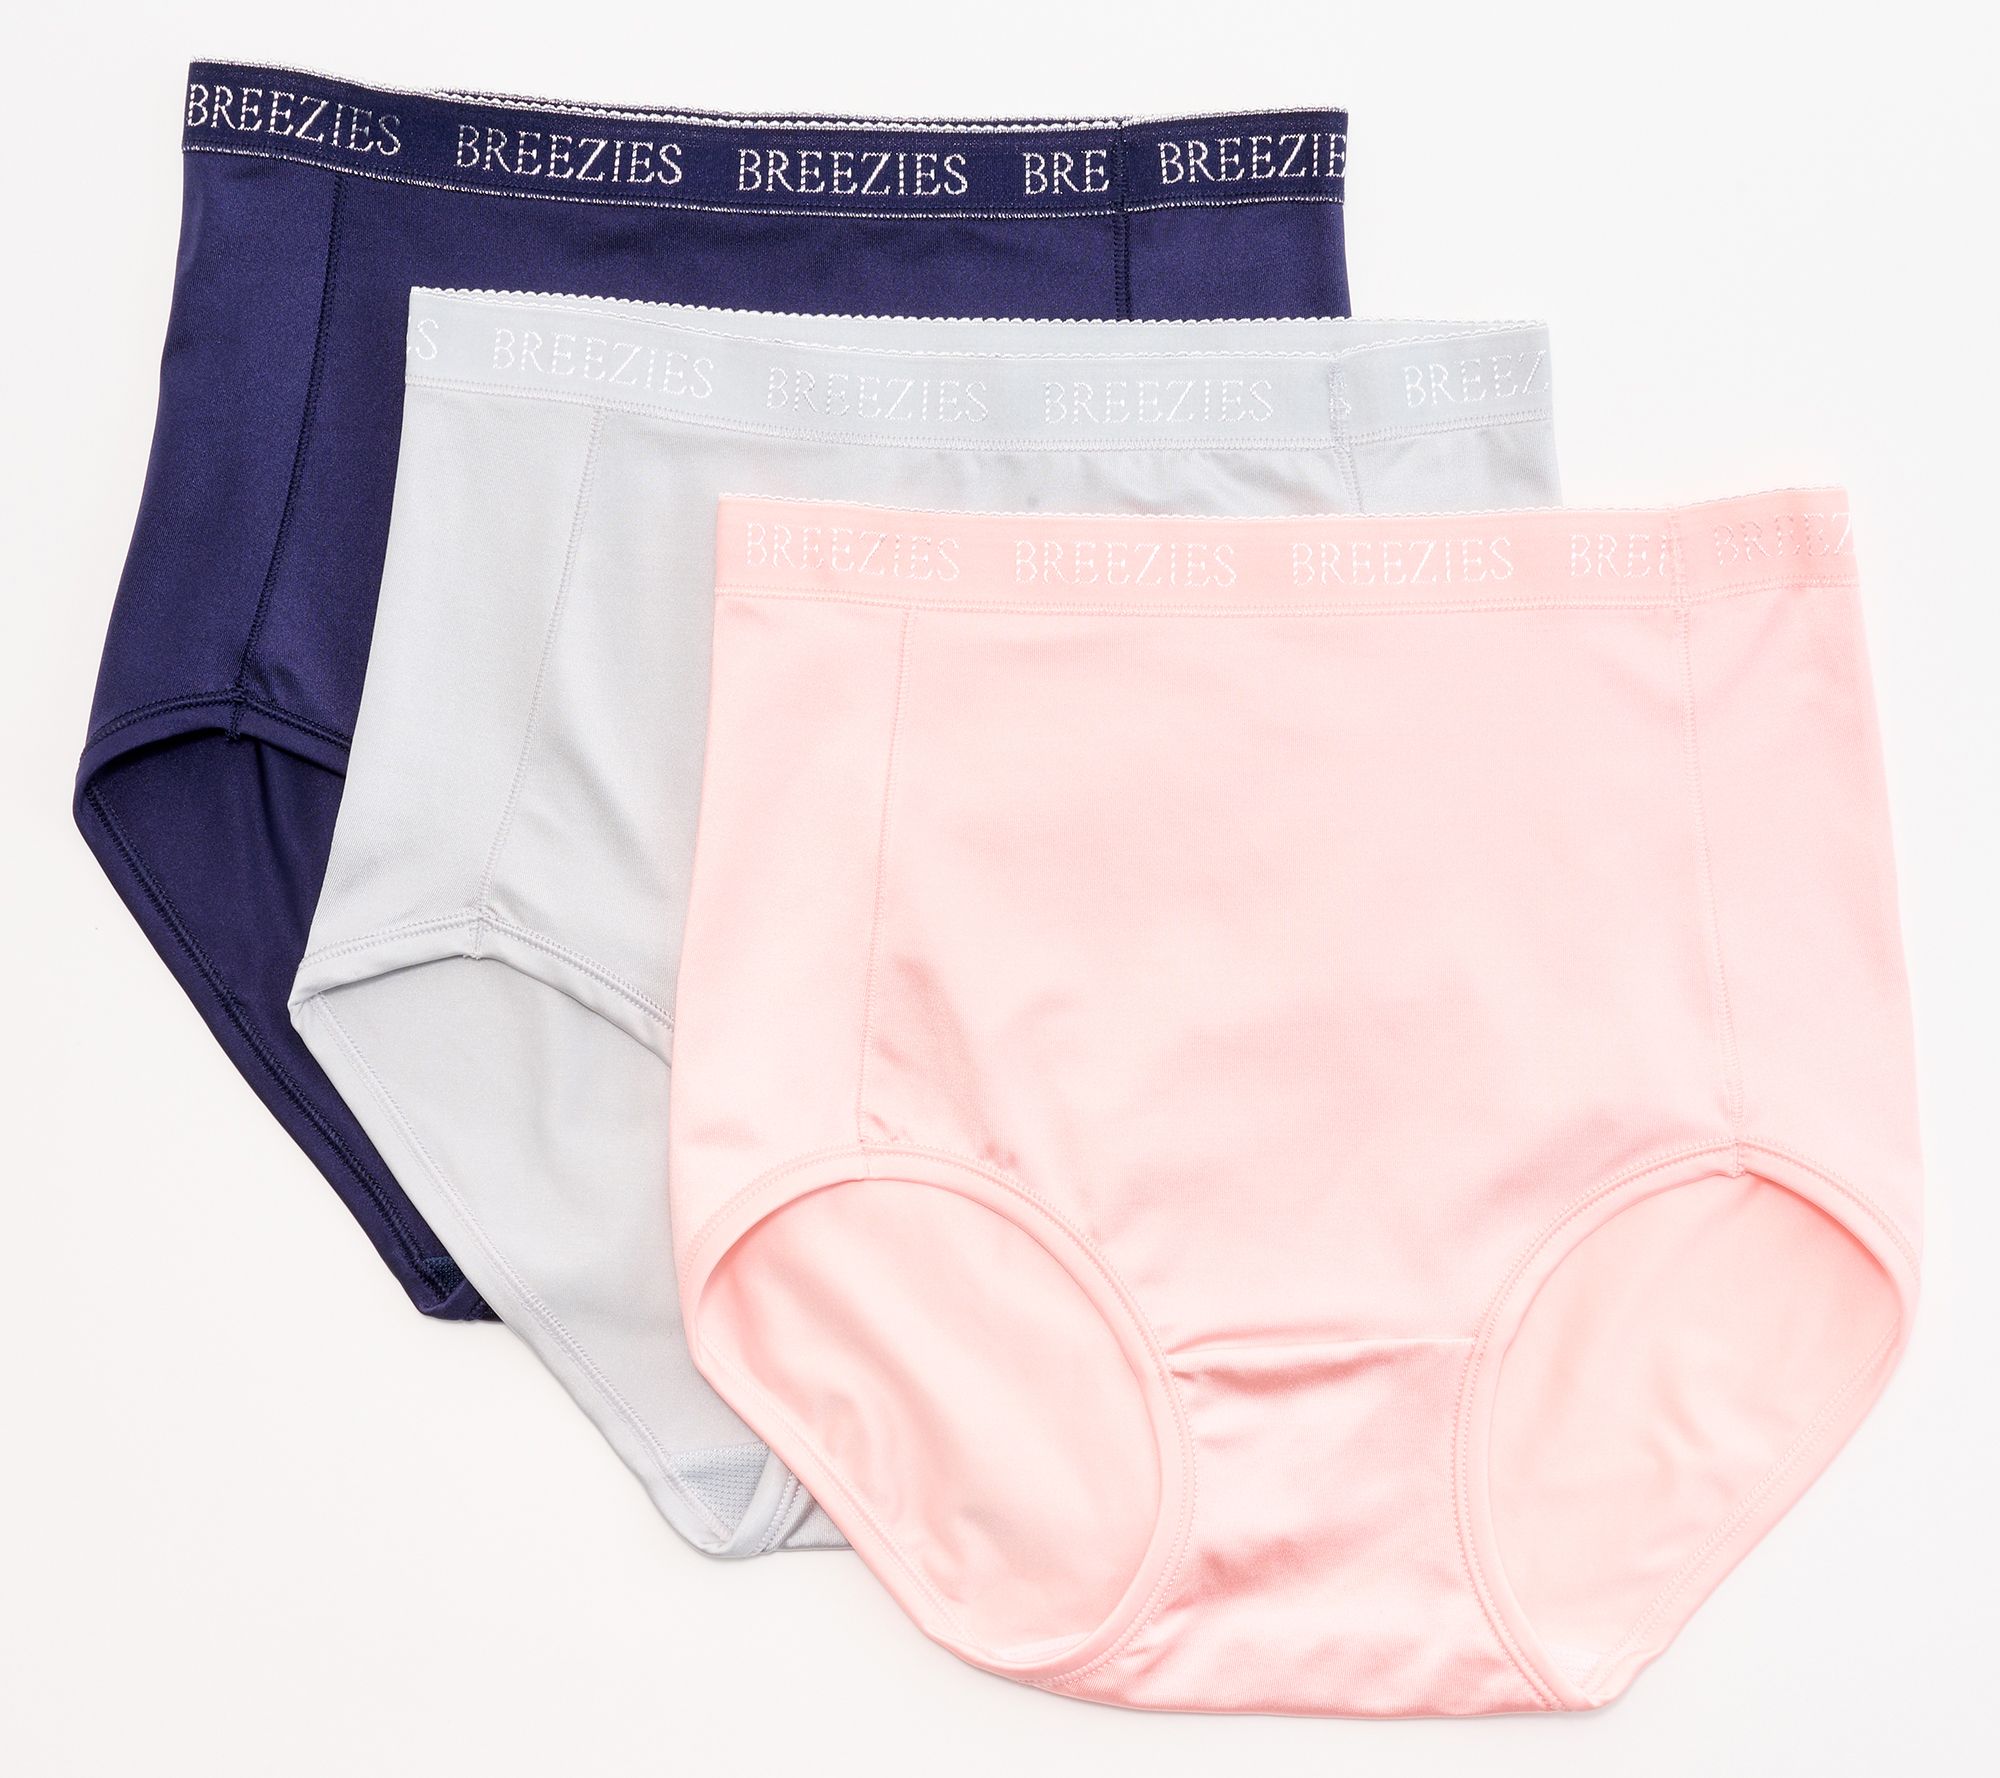 Breezies, Intimates & Sleepwear, Copy Breezies 3 Pk Microfiber Panties  Nylon Sz Large